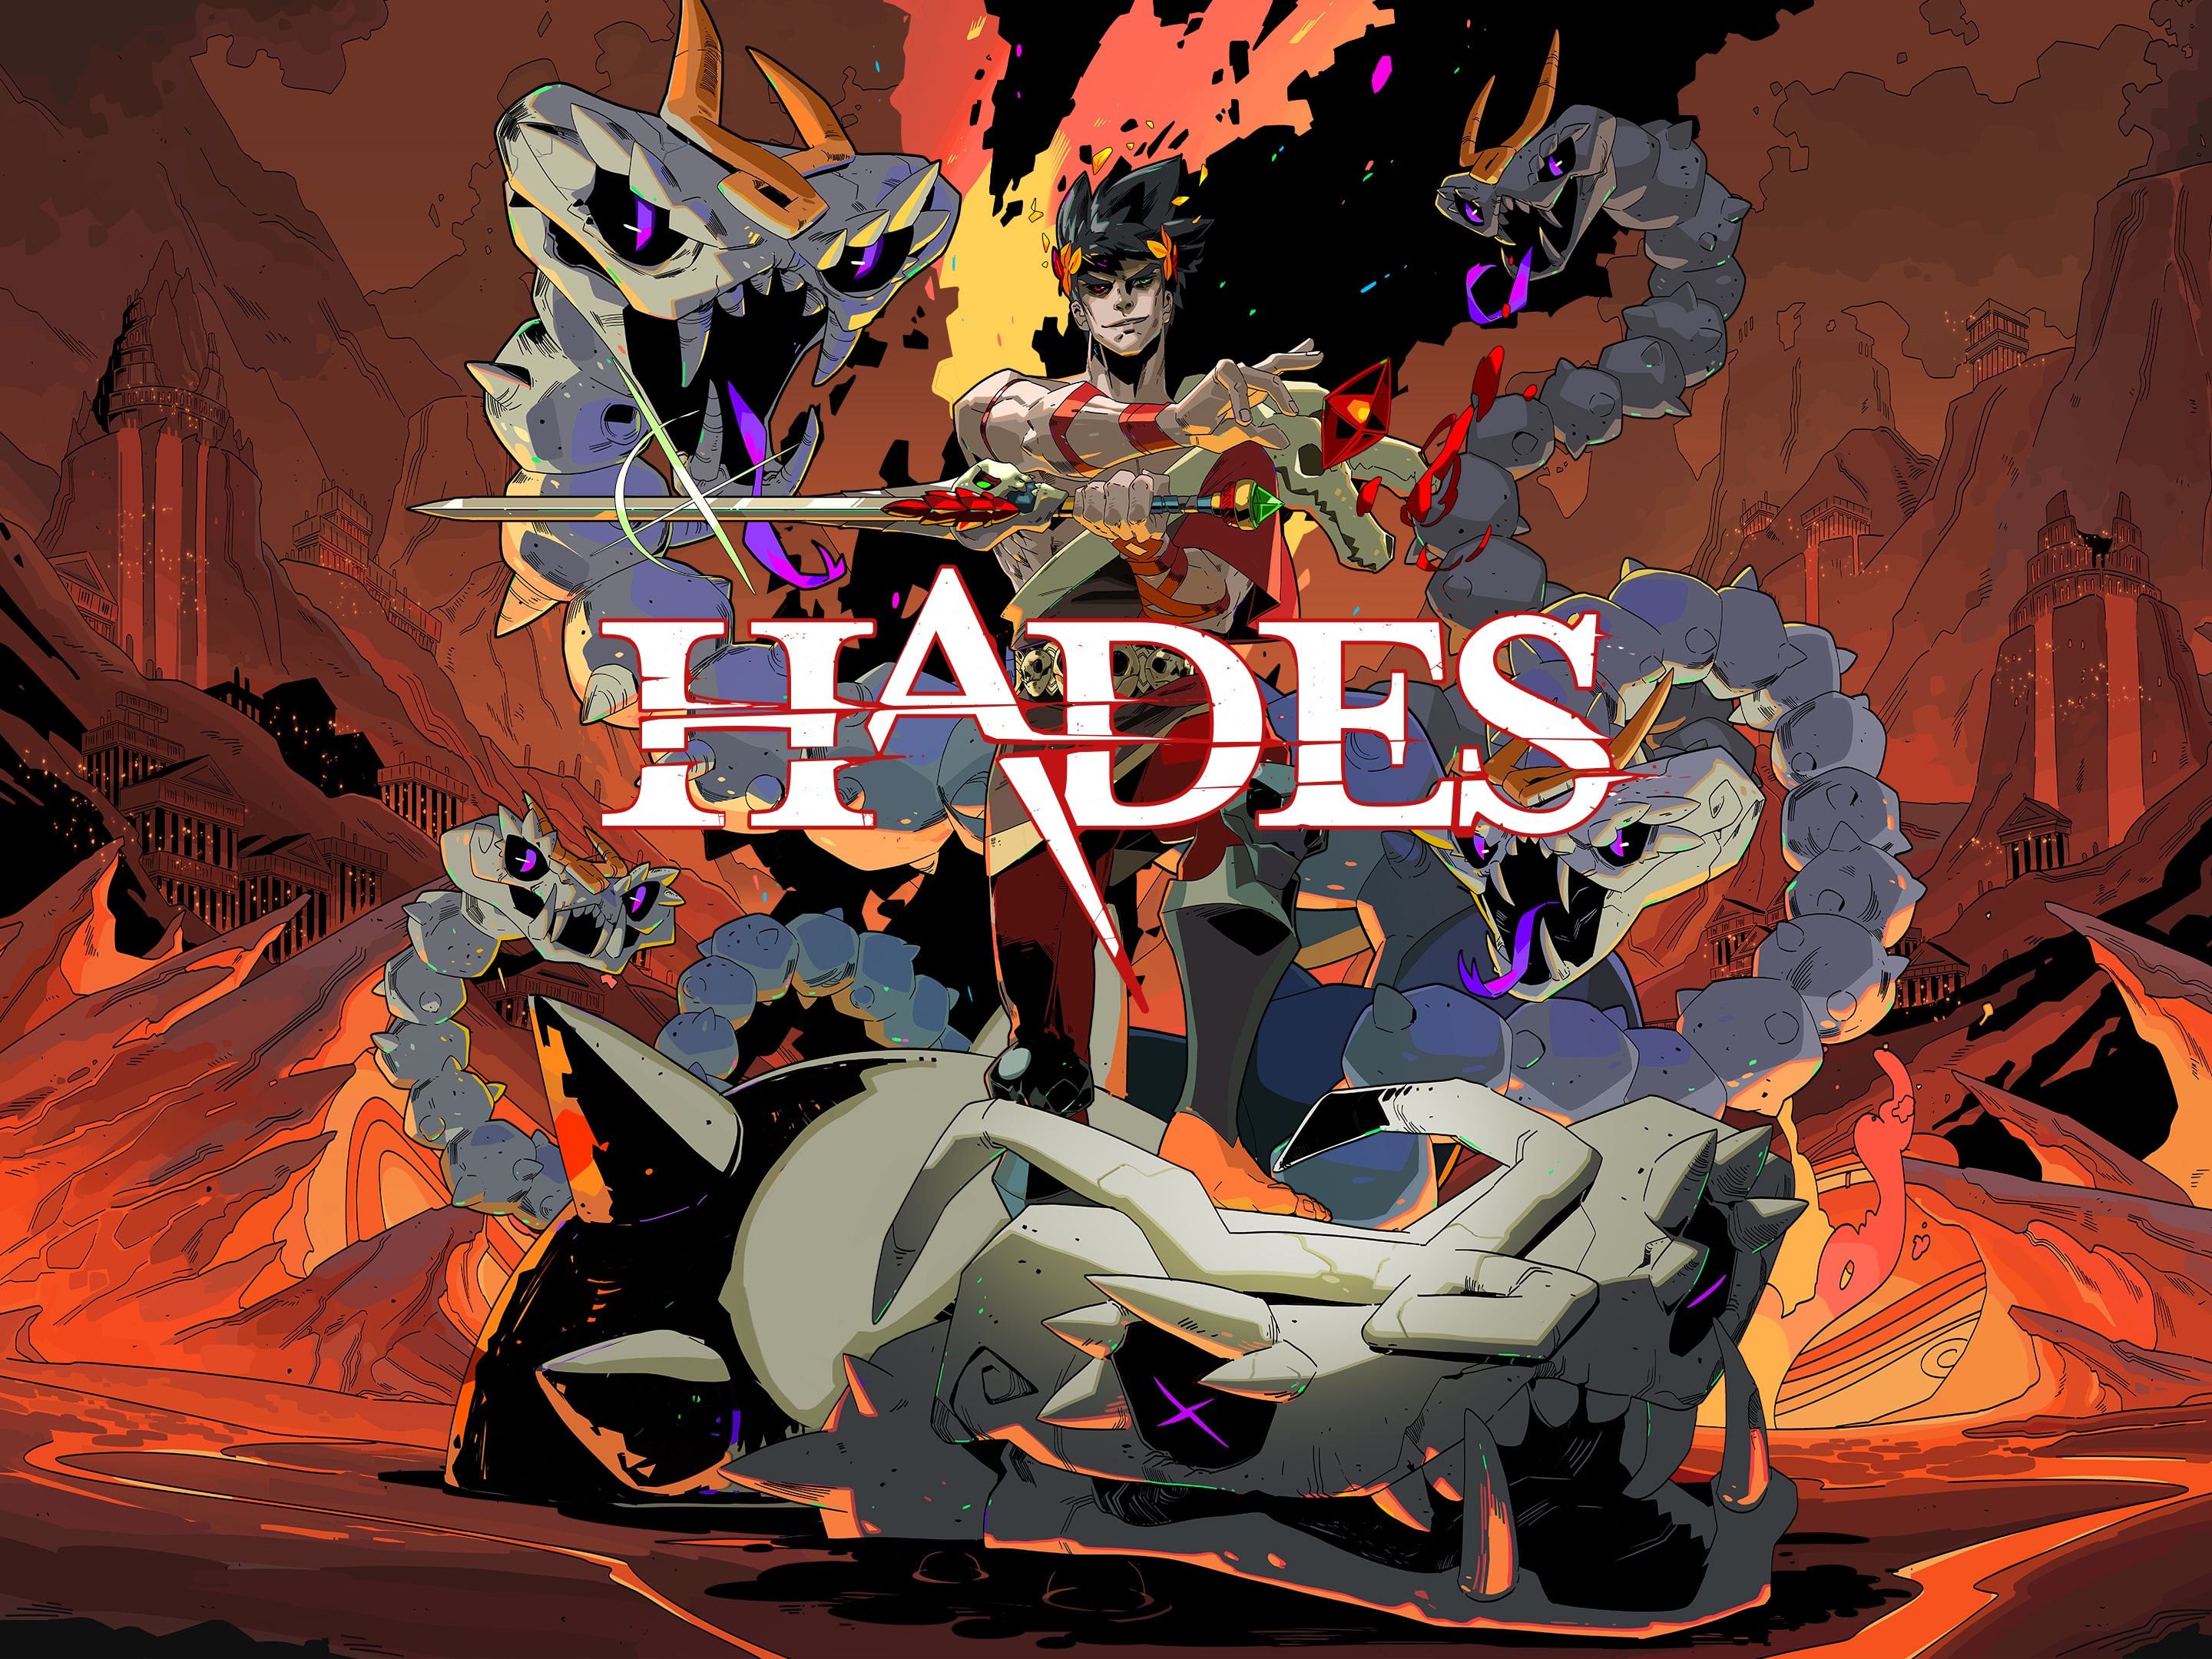 Hades (2021), PS4 Game